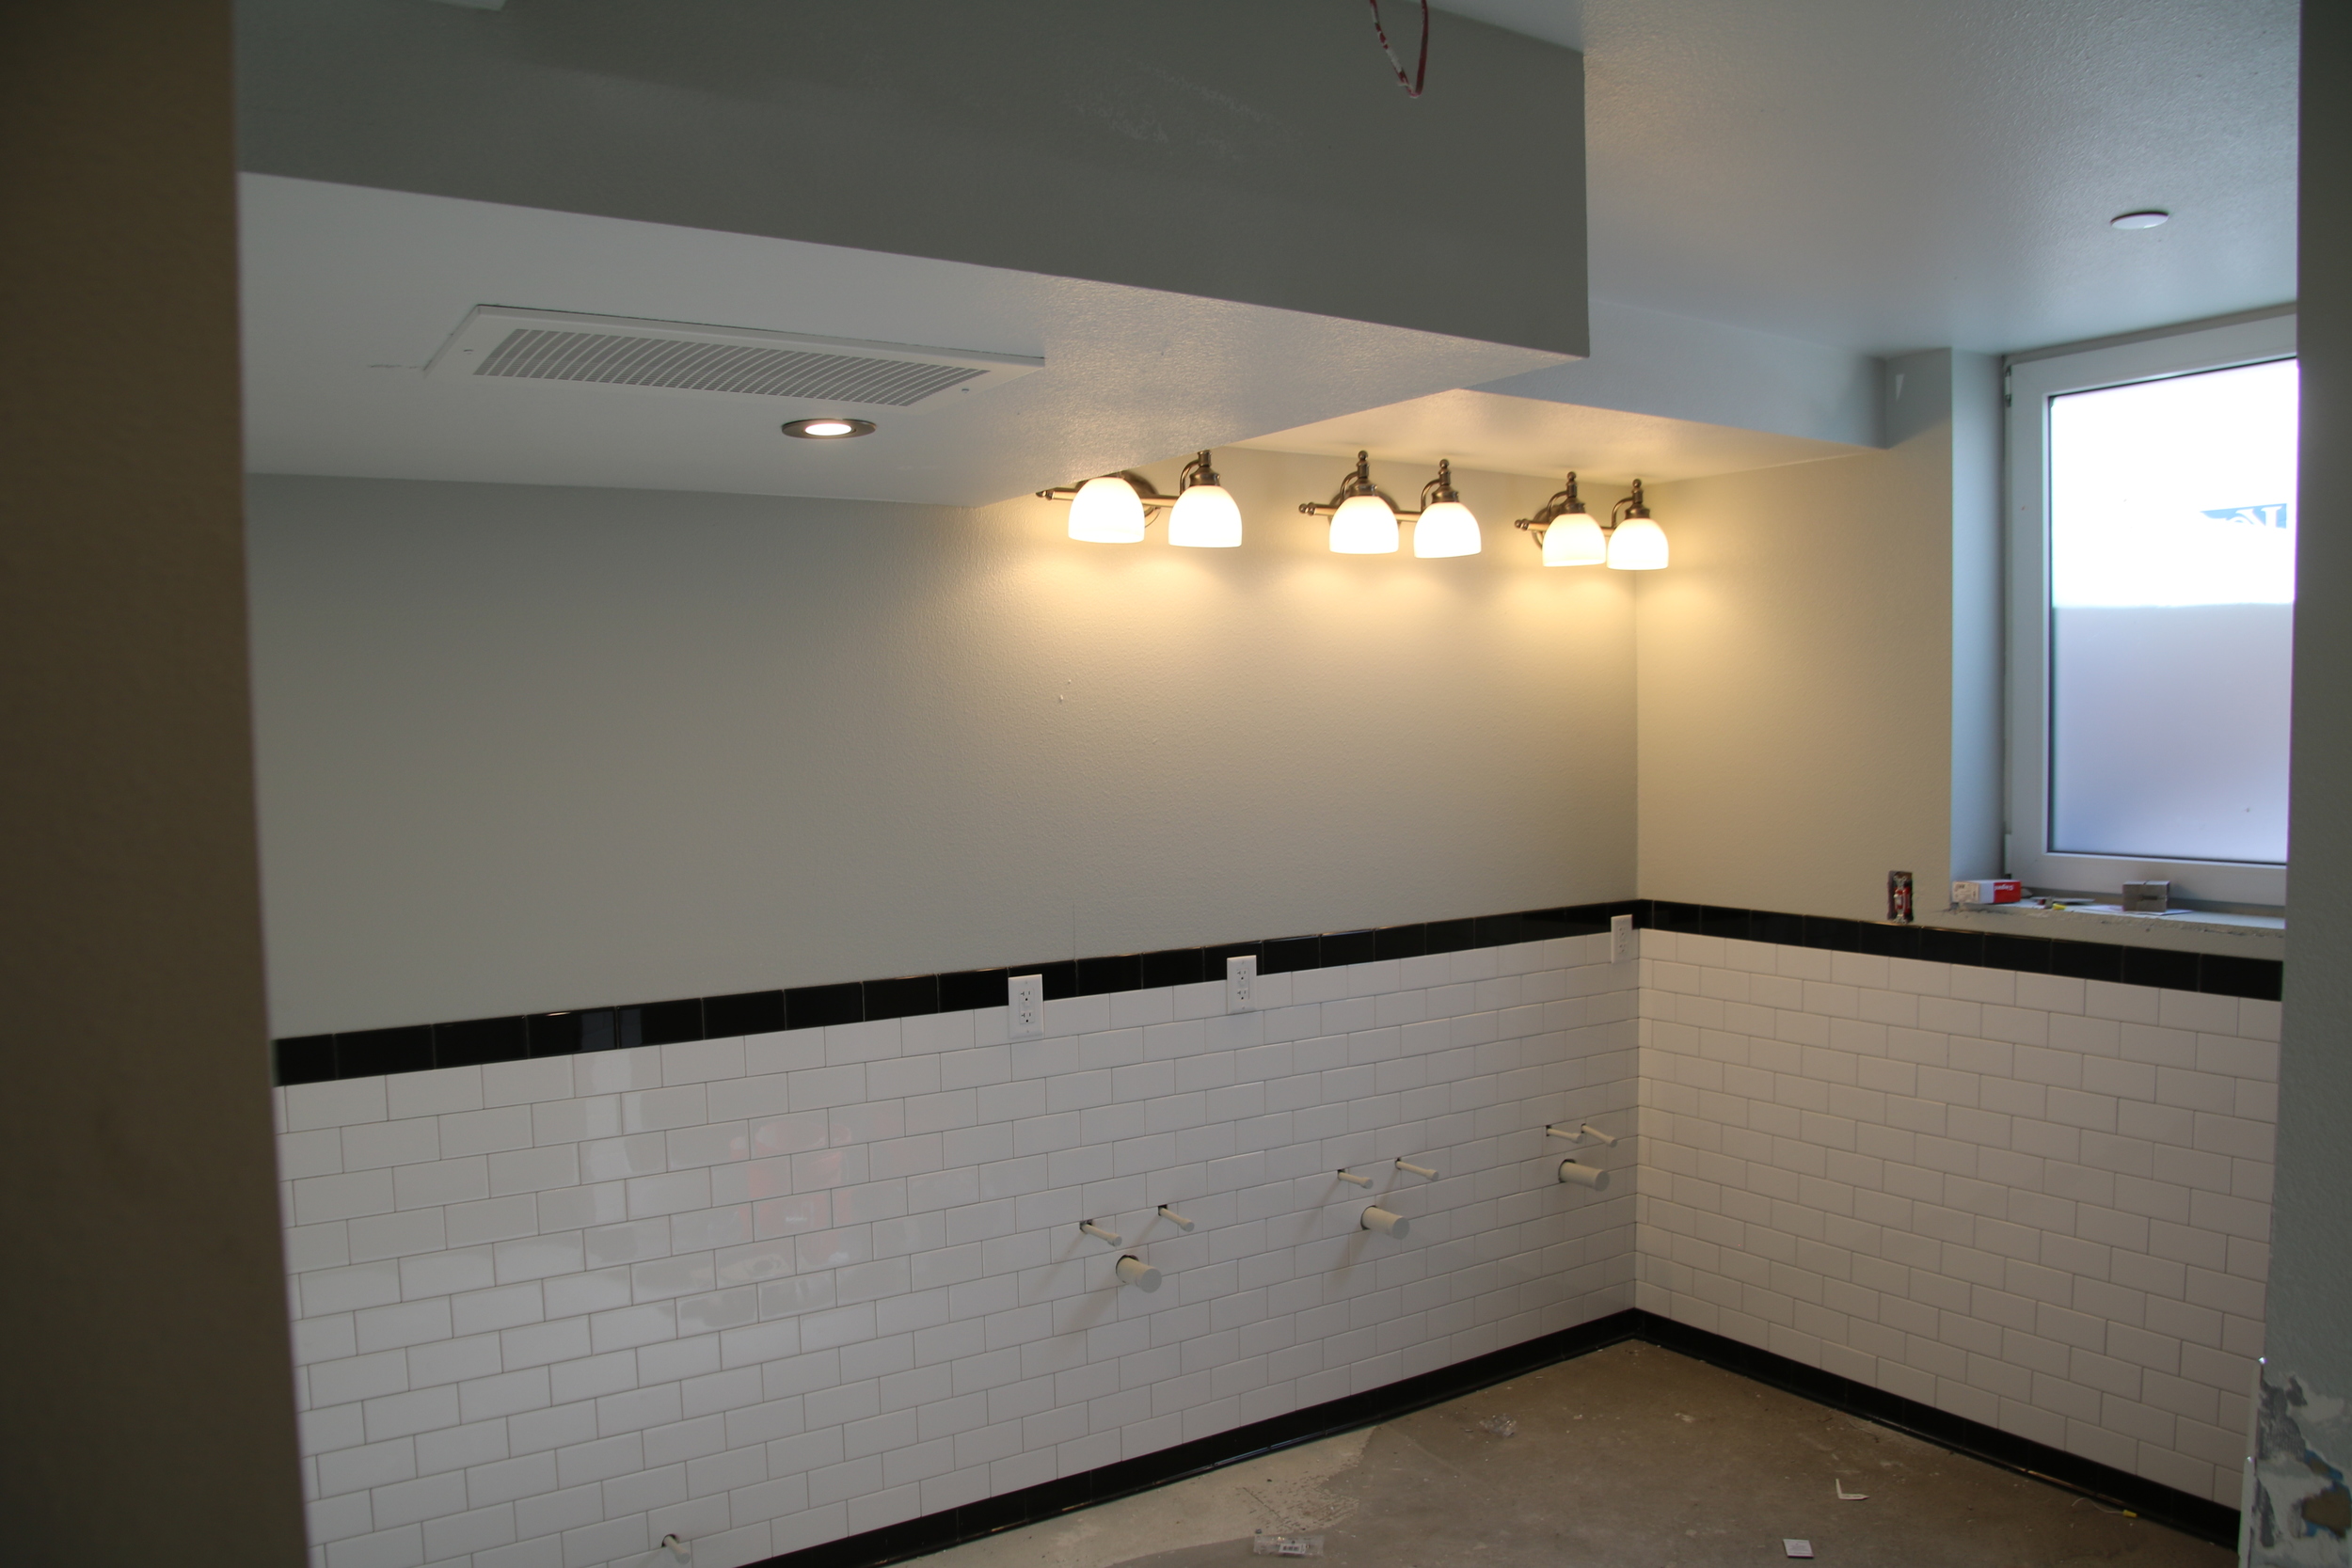 2016-02-03 Basement Bathroom vanity area.JPG